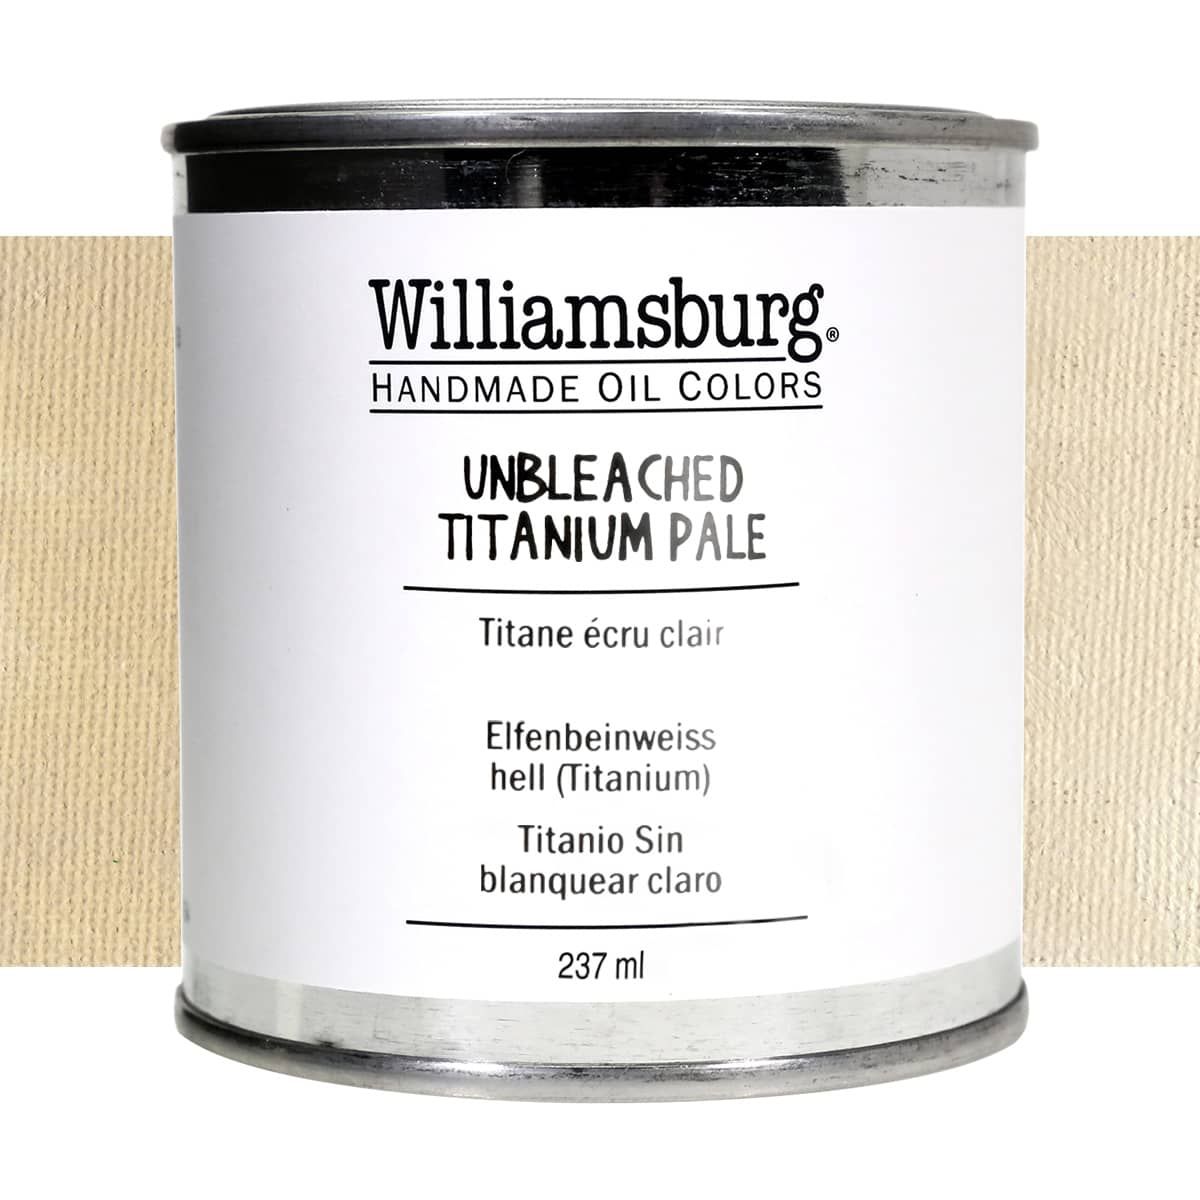 Williamsburg Oil Color 237 ml Can Unbleached Titanium Pale